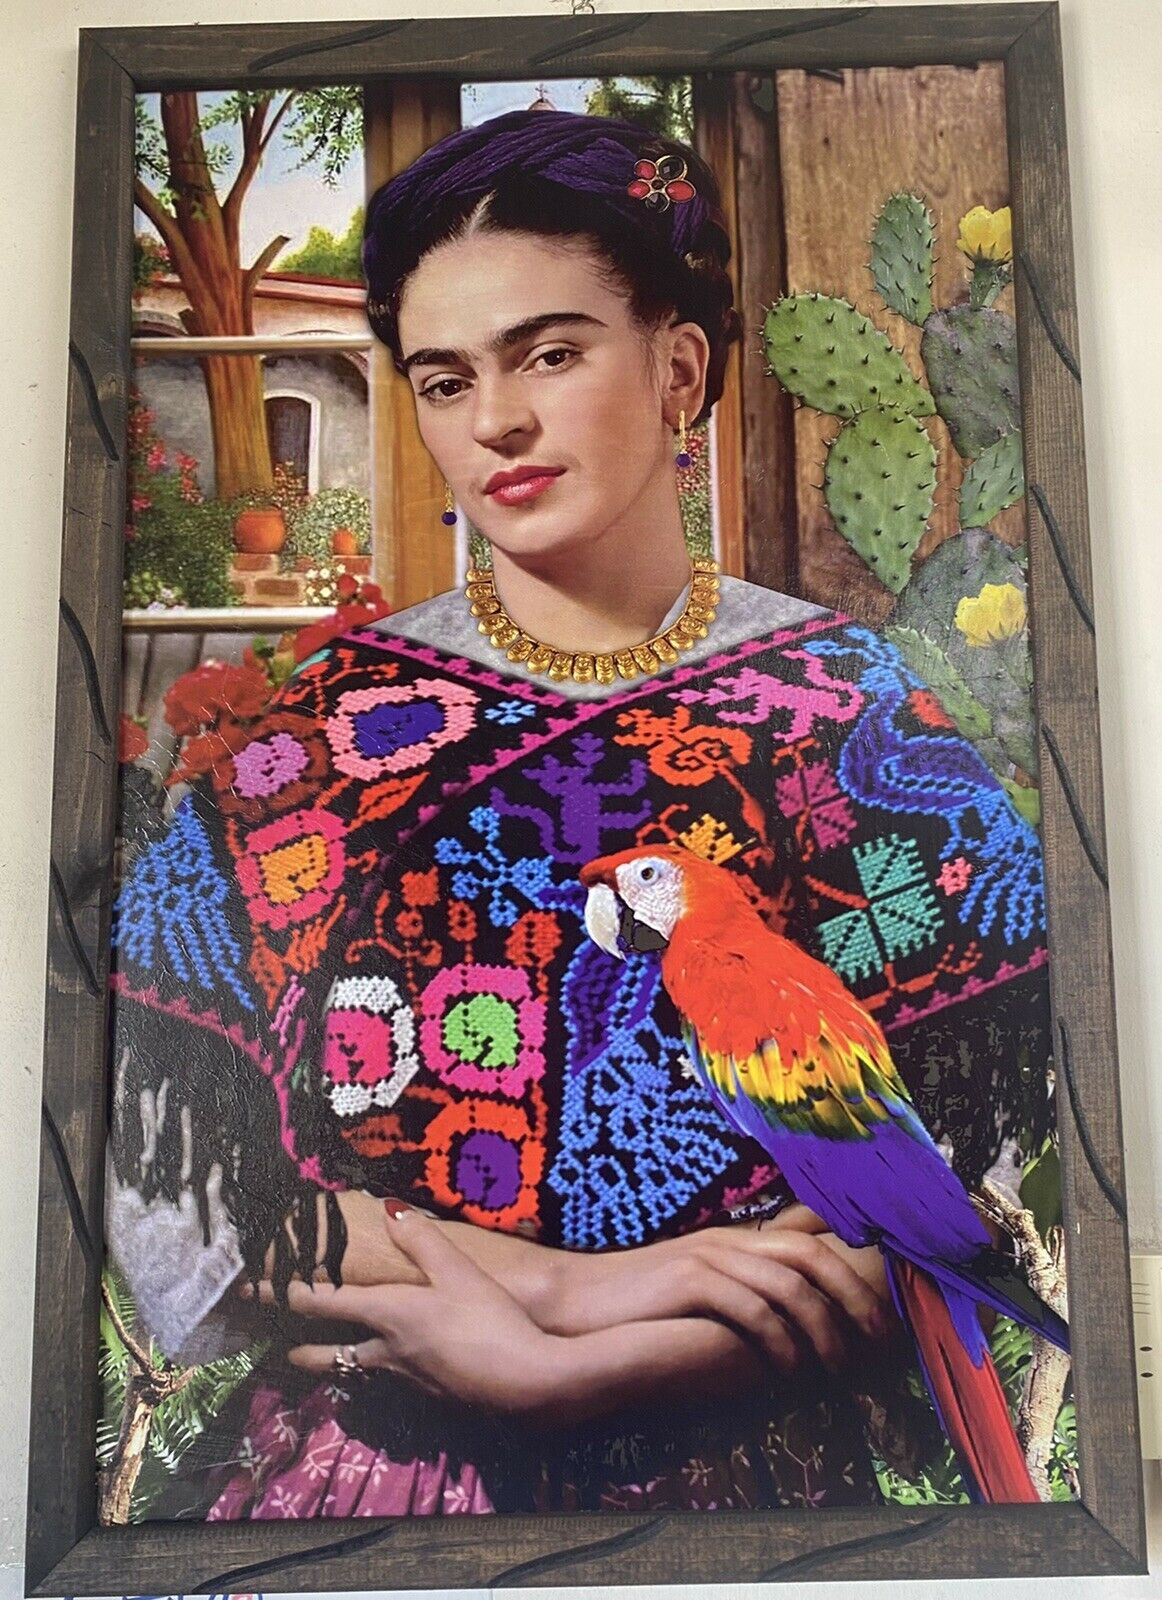 Art Print/painting Mexico Frame Frida Kahlo 35"x 24"